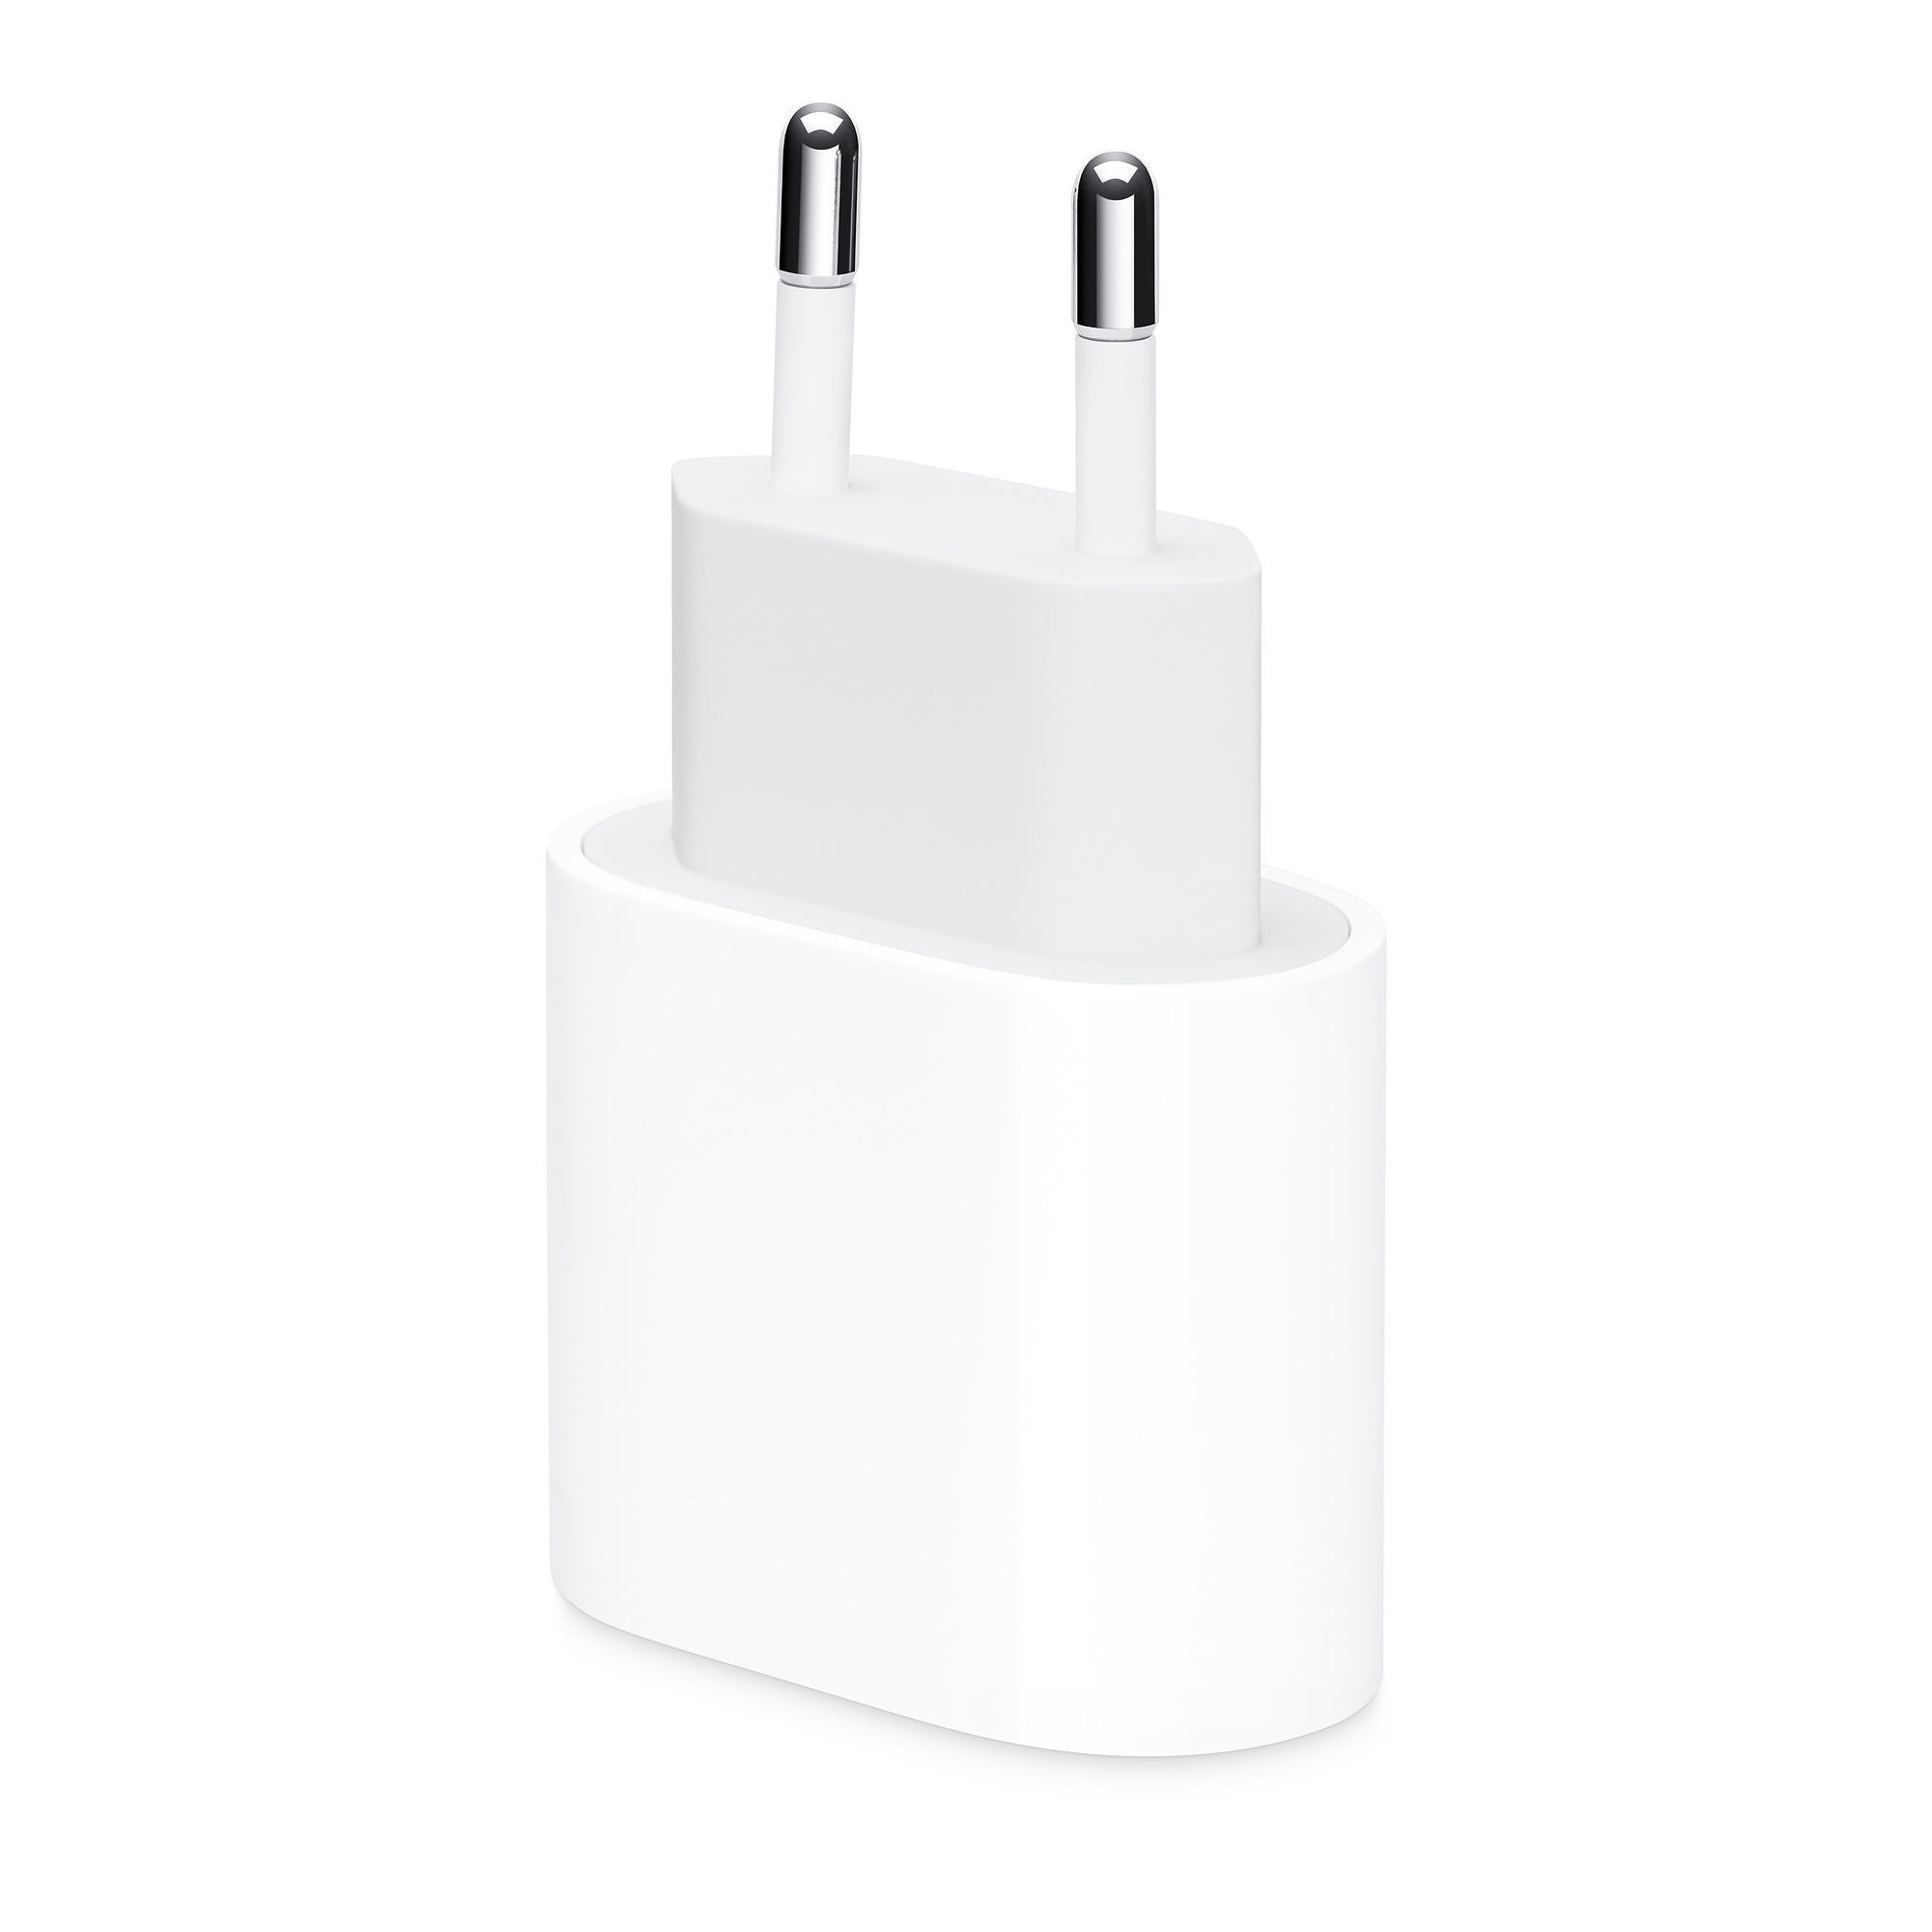 Apple Power Adapter 20 APPLE W, Weiß C USB Netzteil